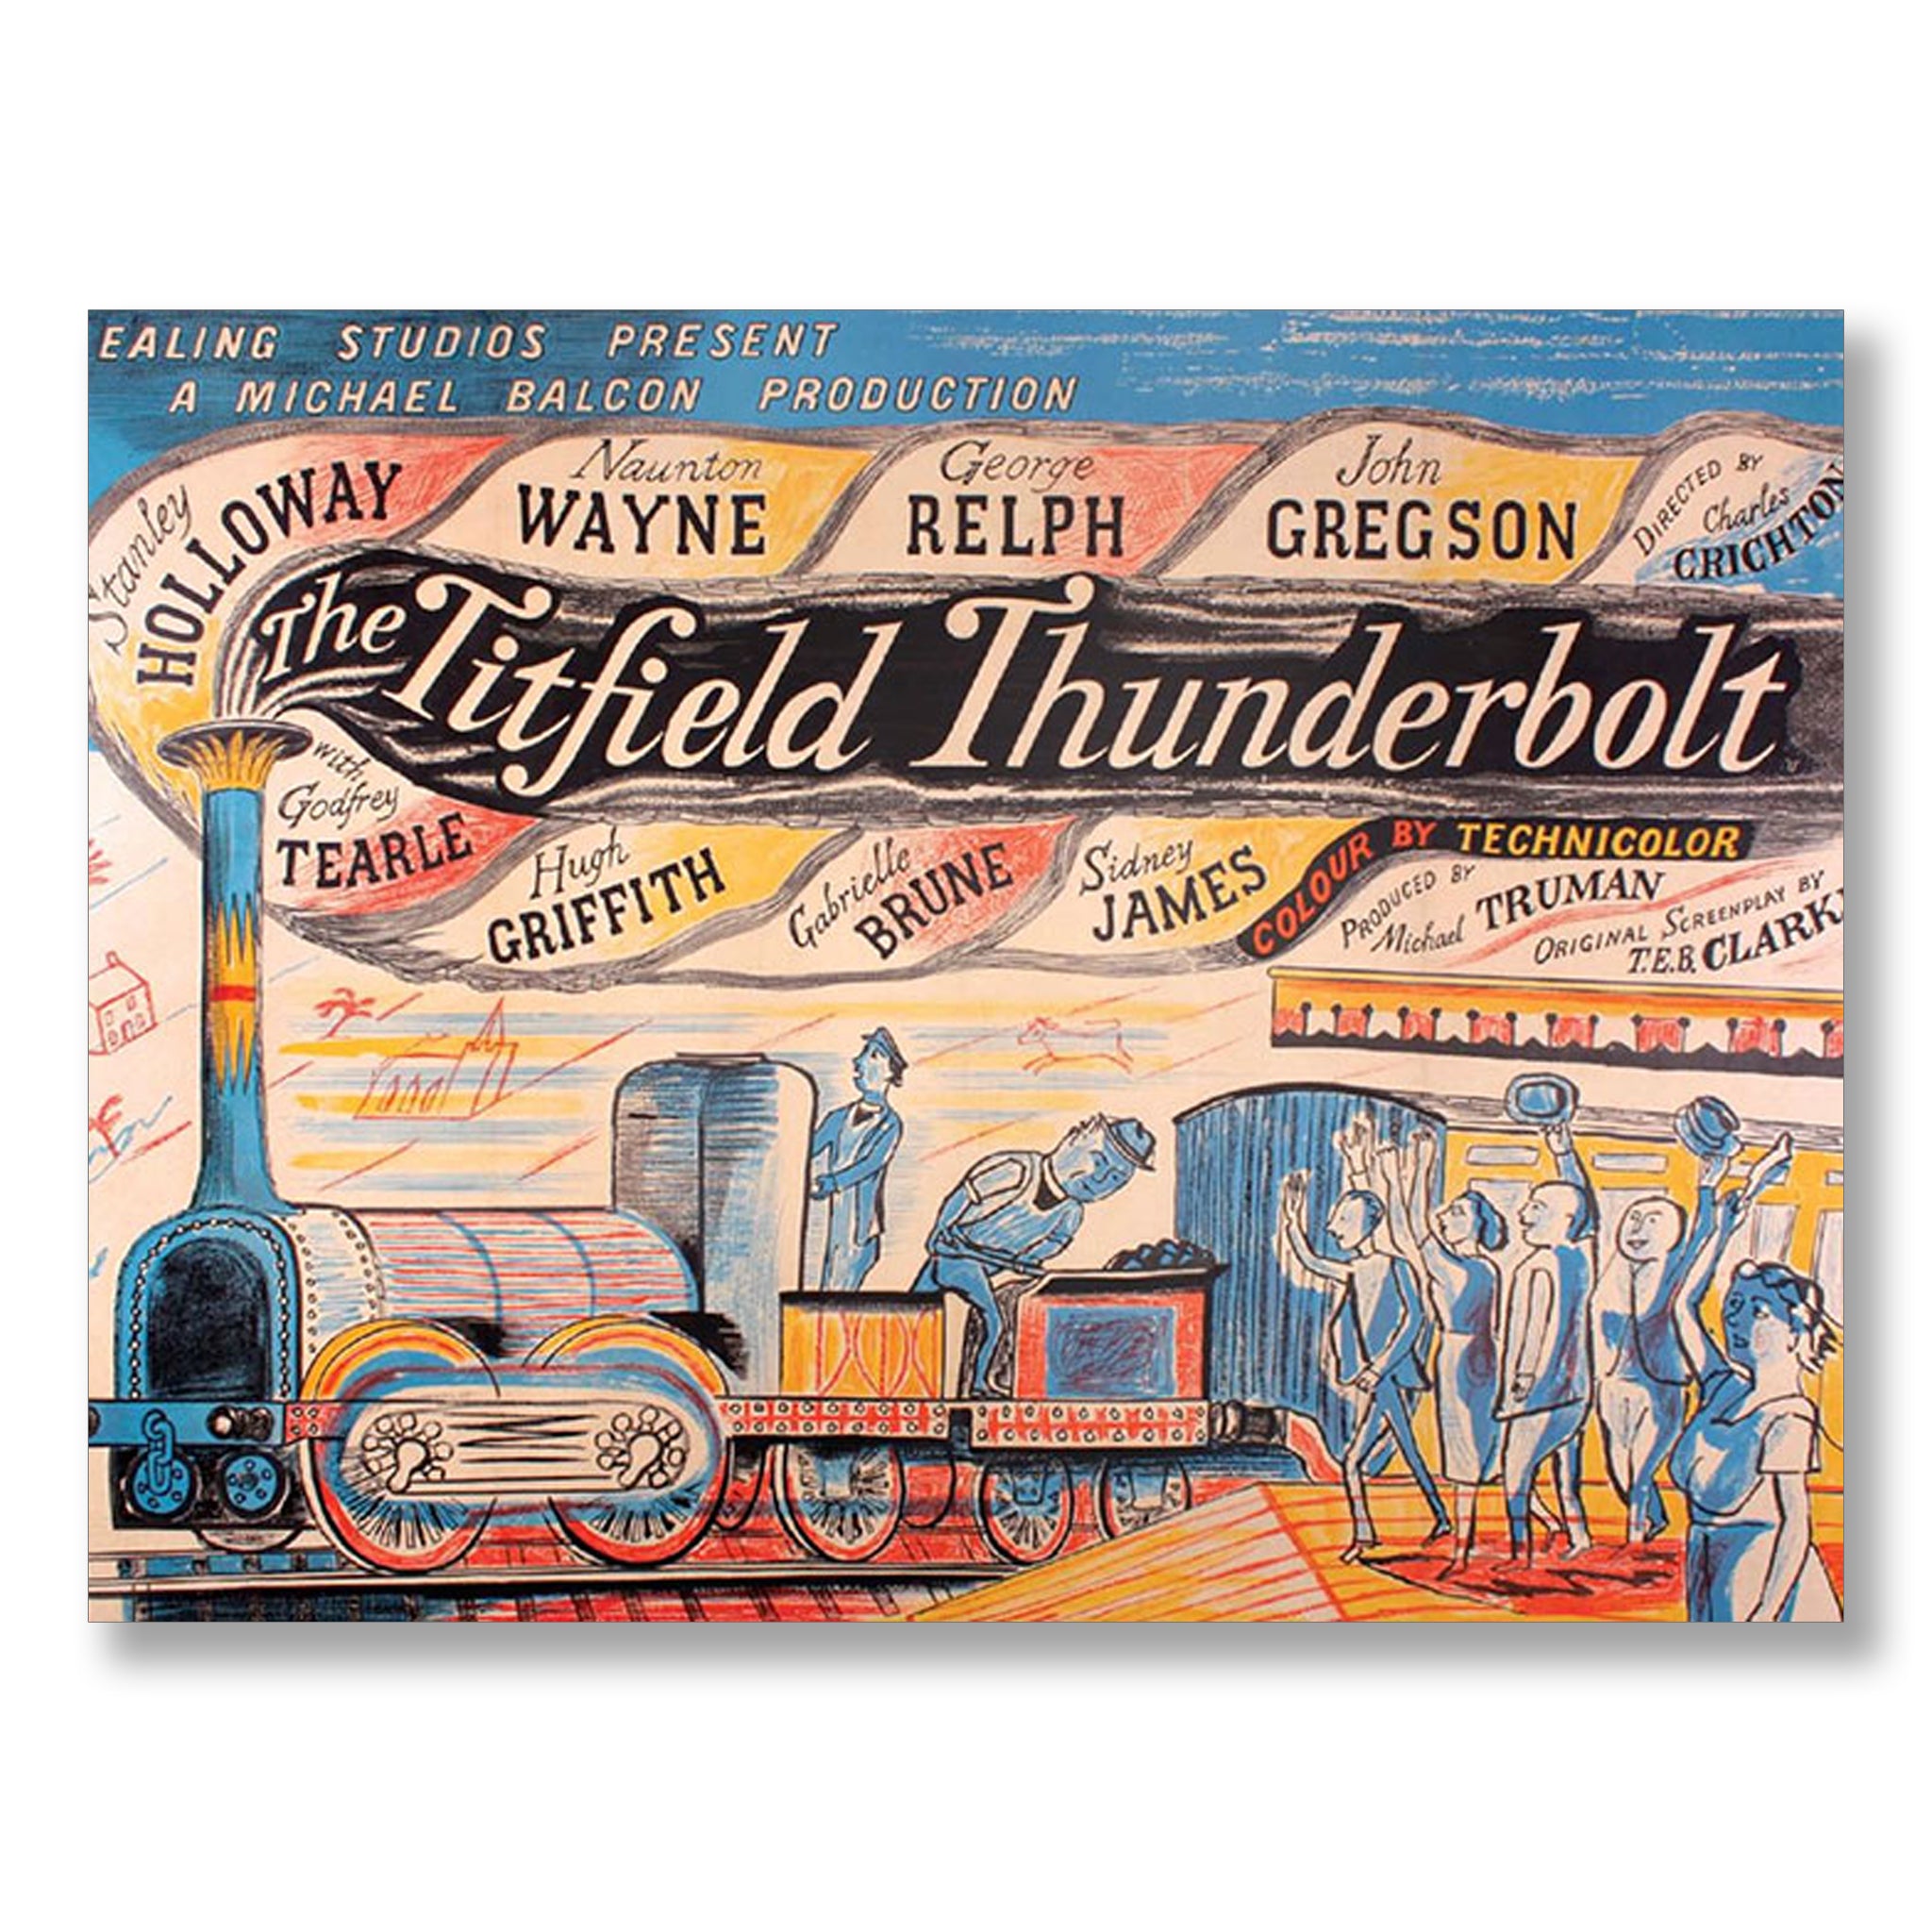 The Titfield Thunderbolt by Edward Bawden